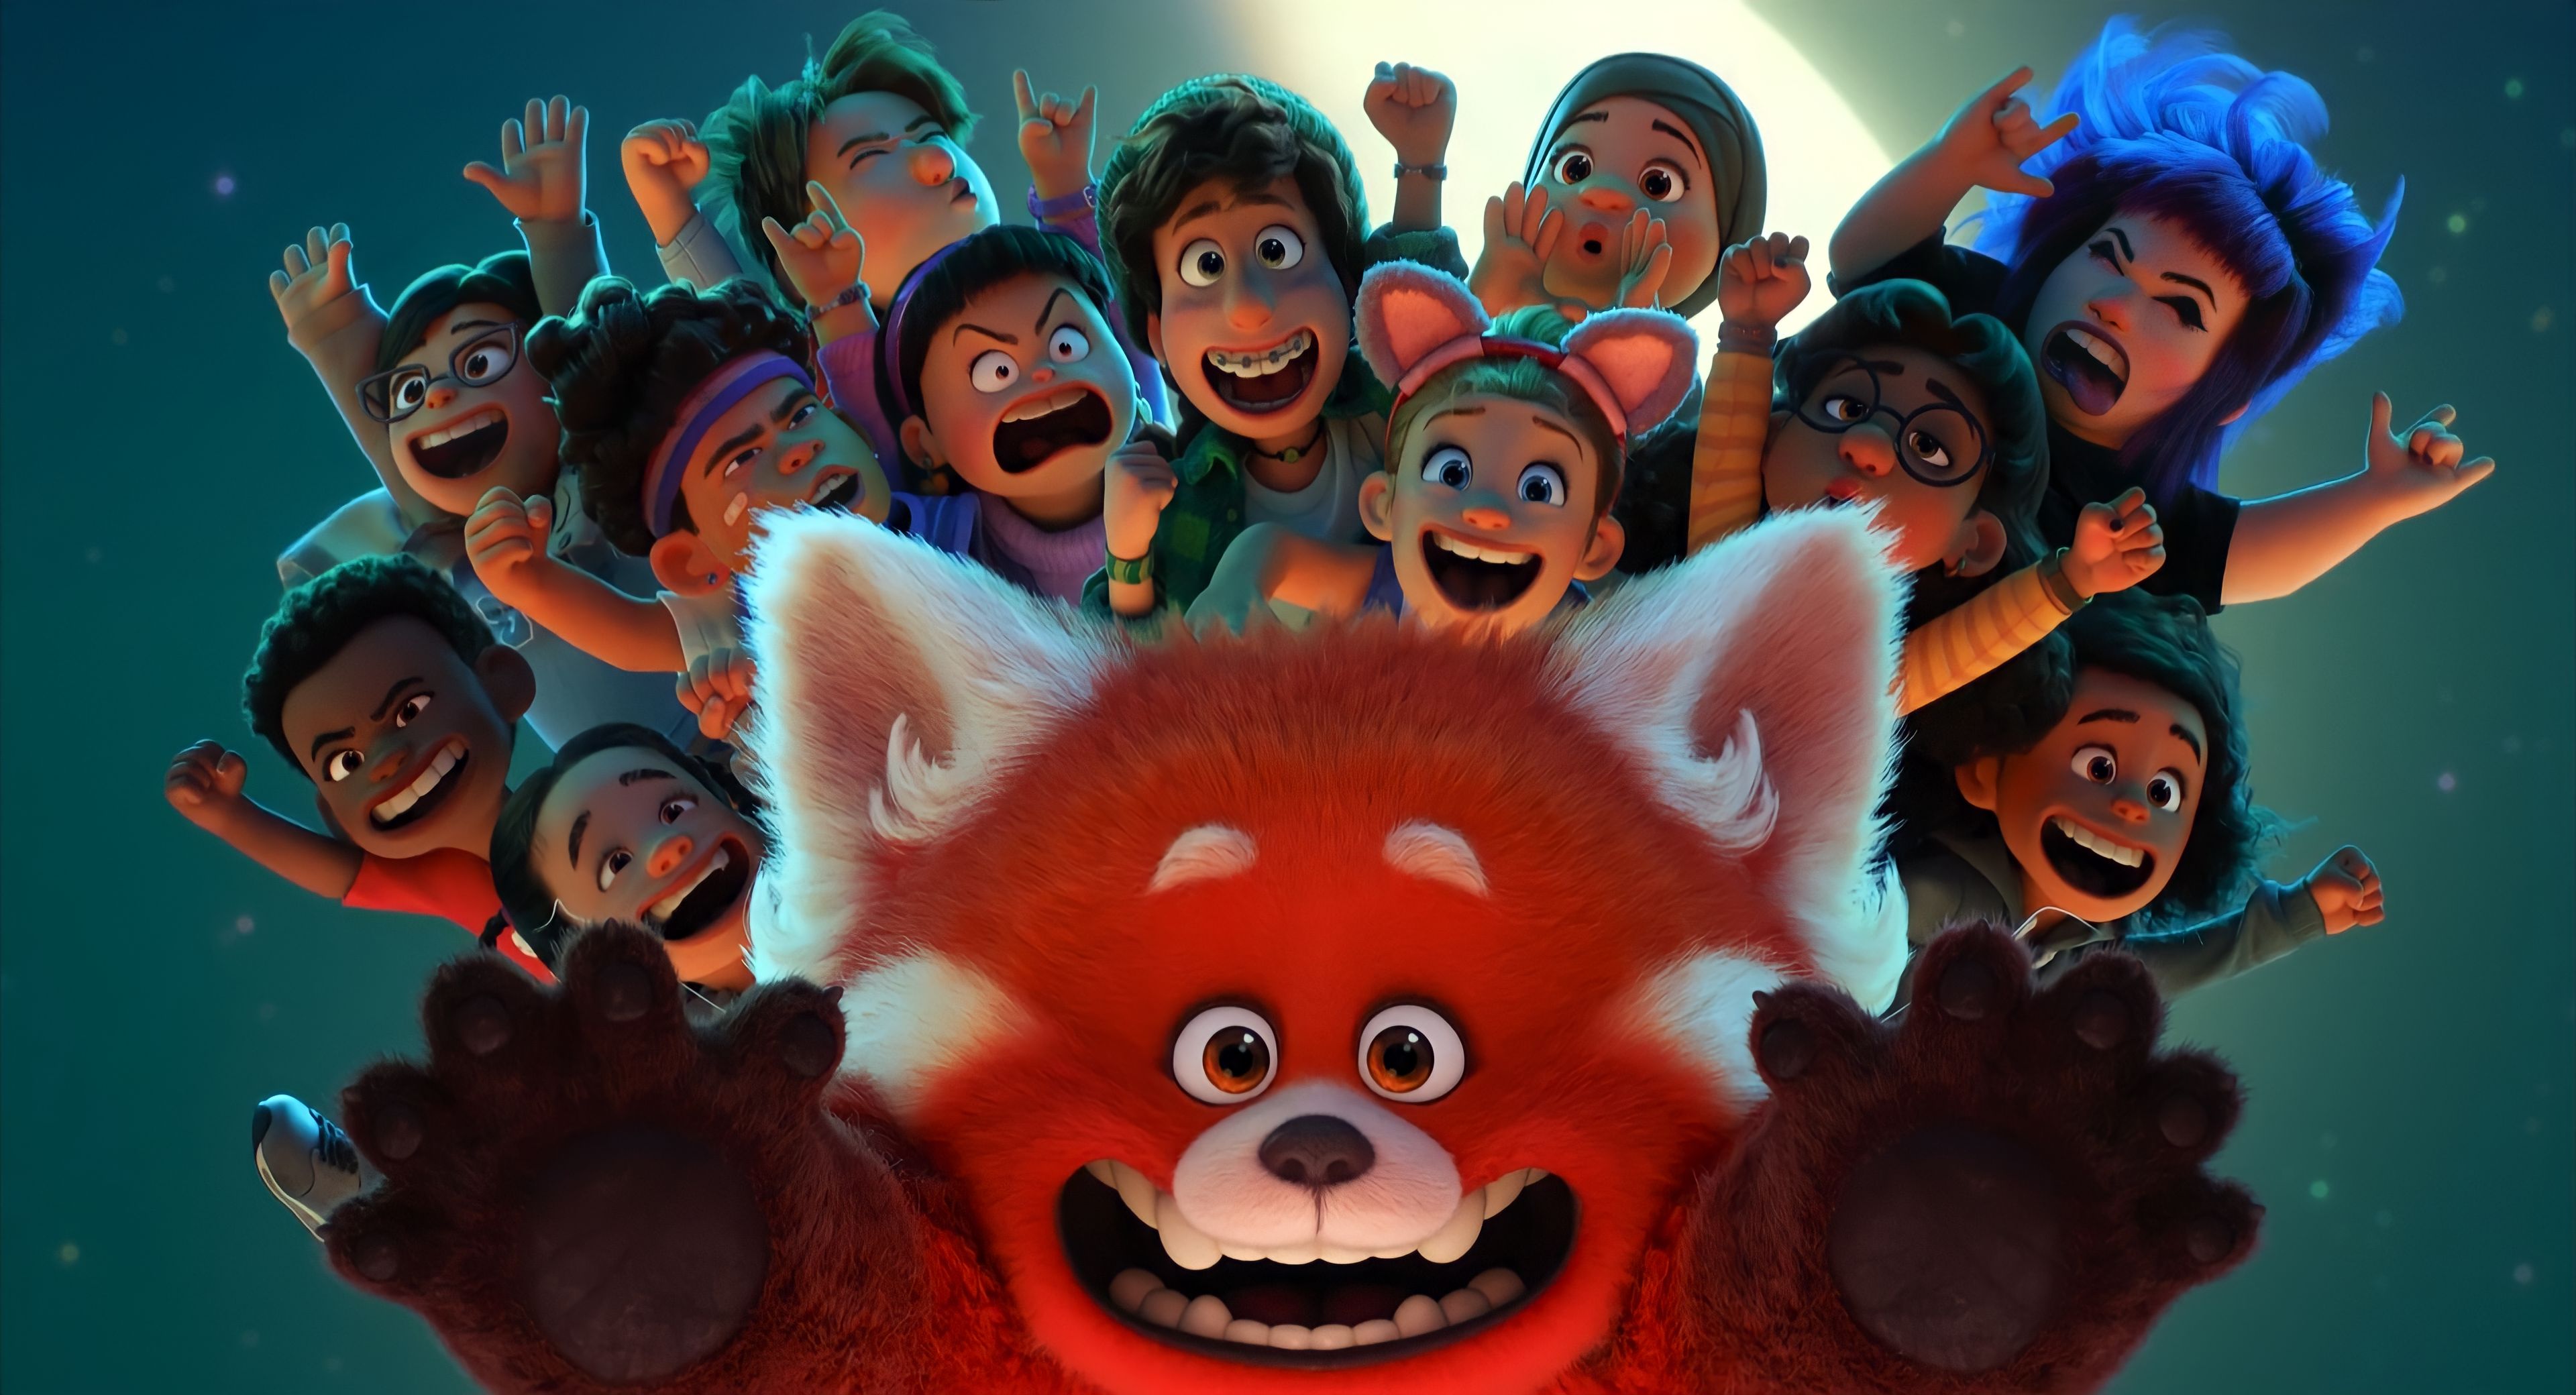 Turning Red Animation Pixar Animation Studios Red Panda Digital Art 3840x2080